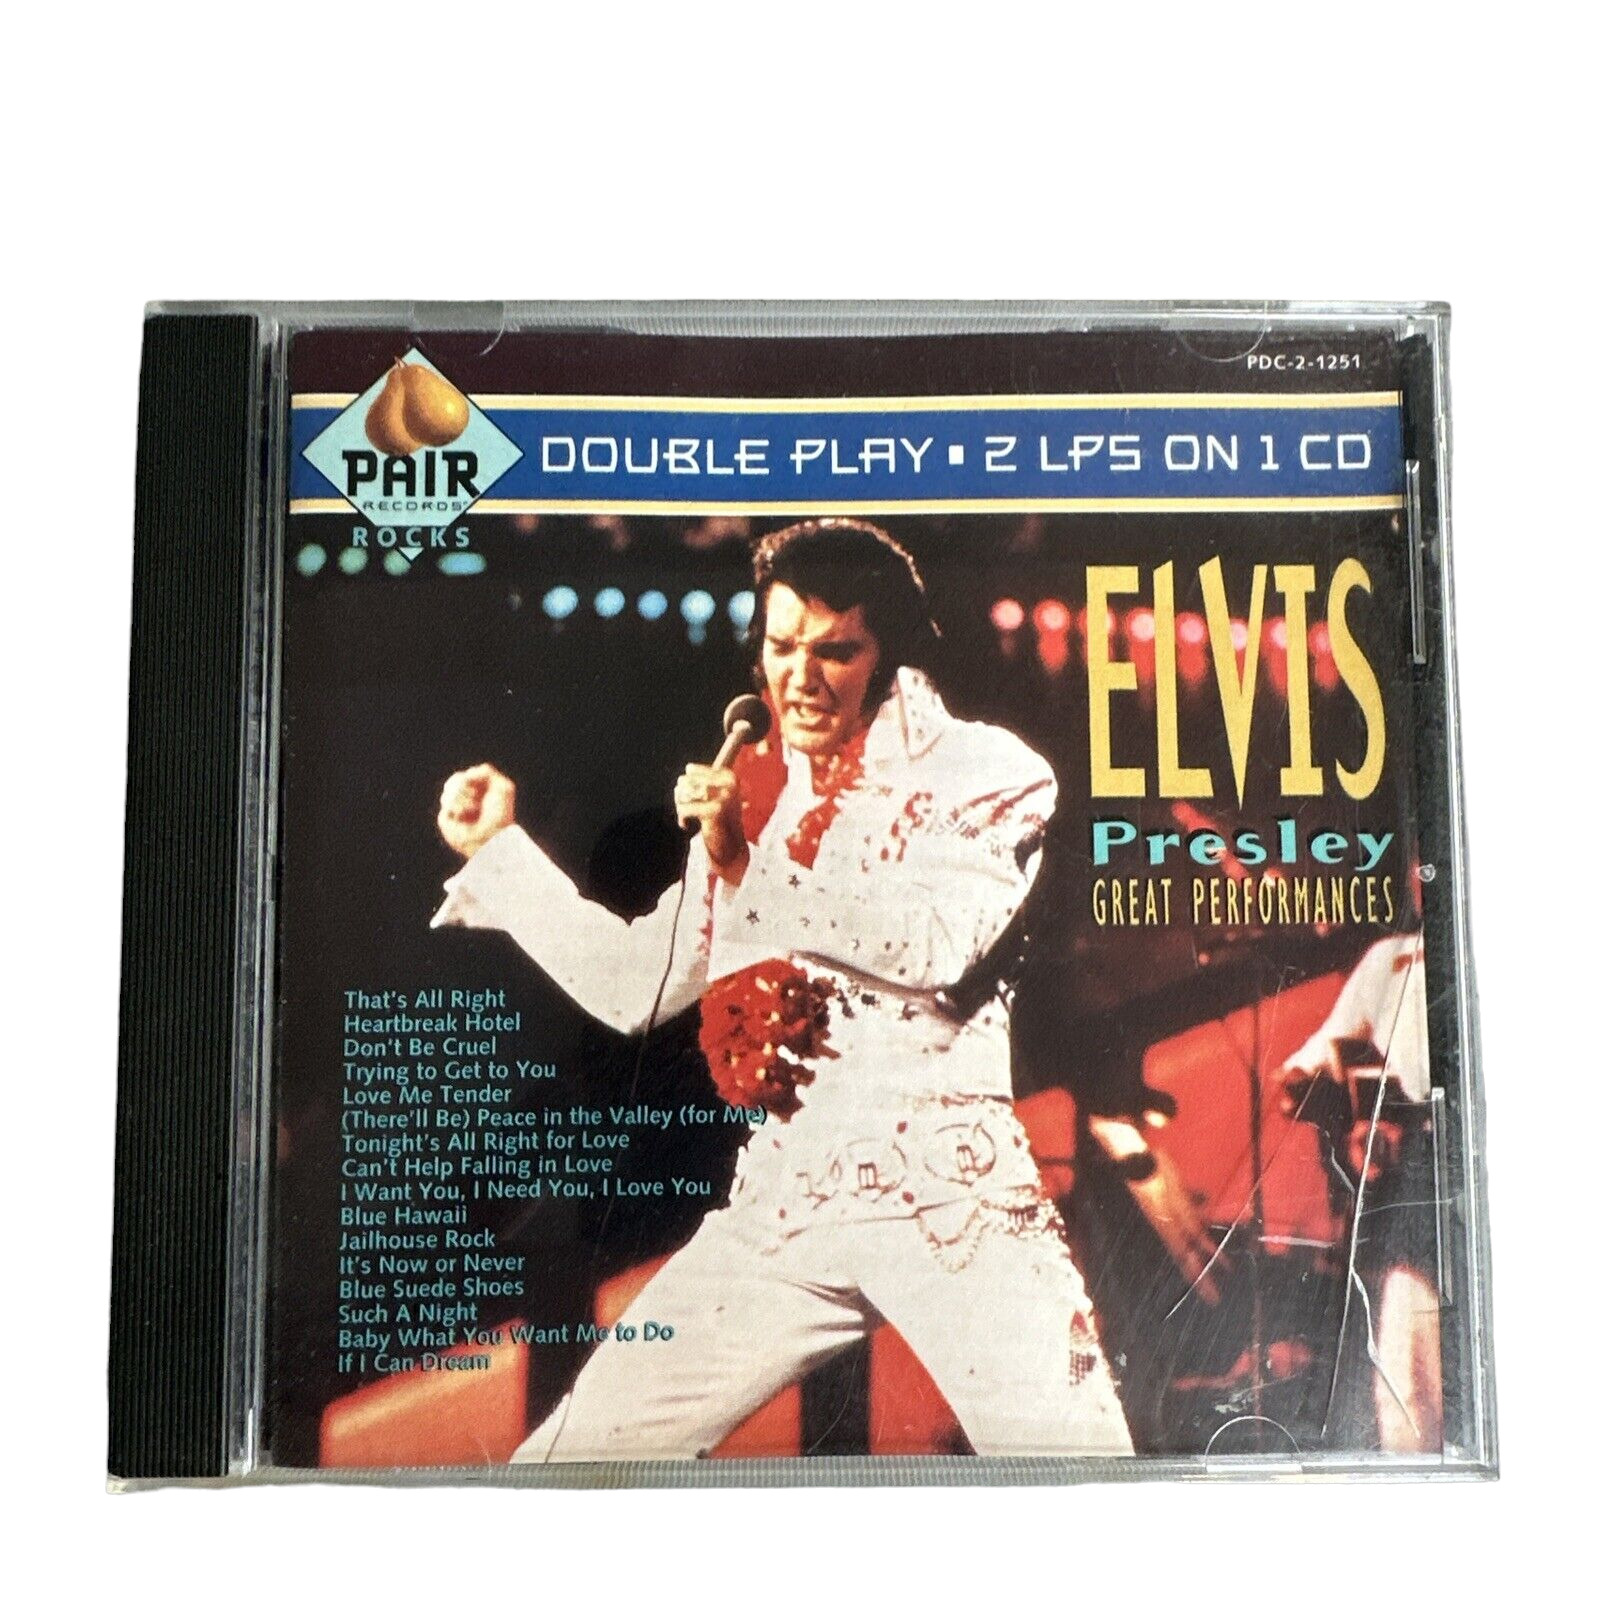 Elvis Presley CD Great Performances 1989 Double Play Pair Records Vintage